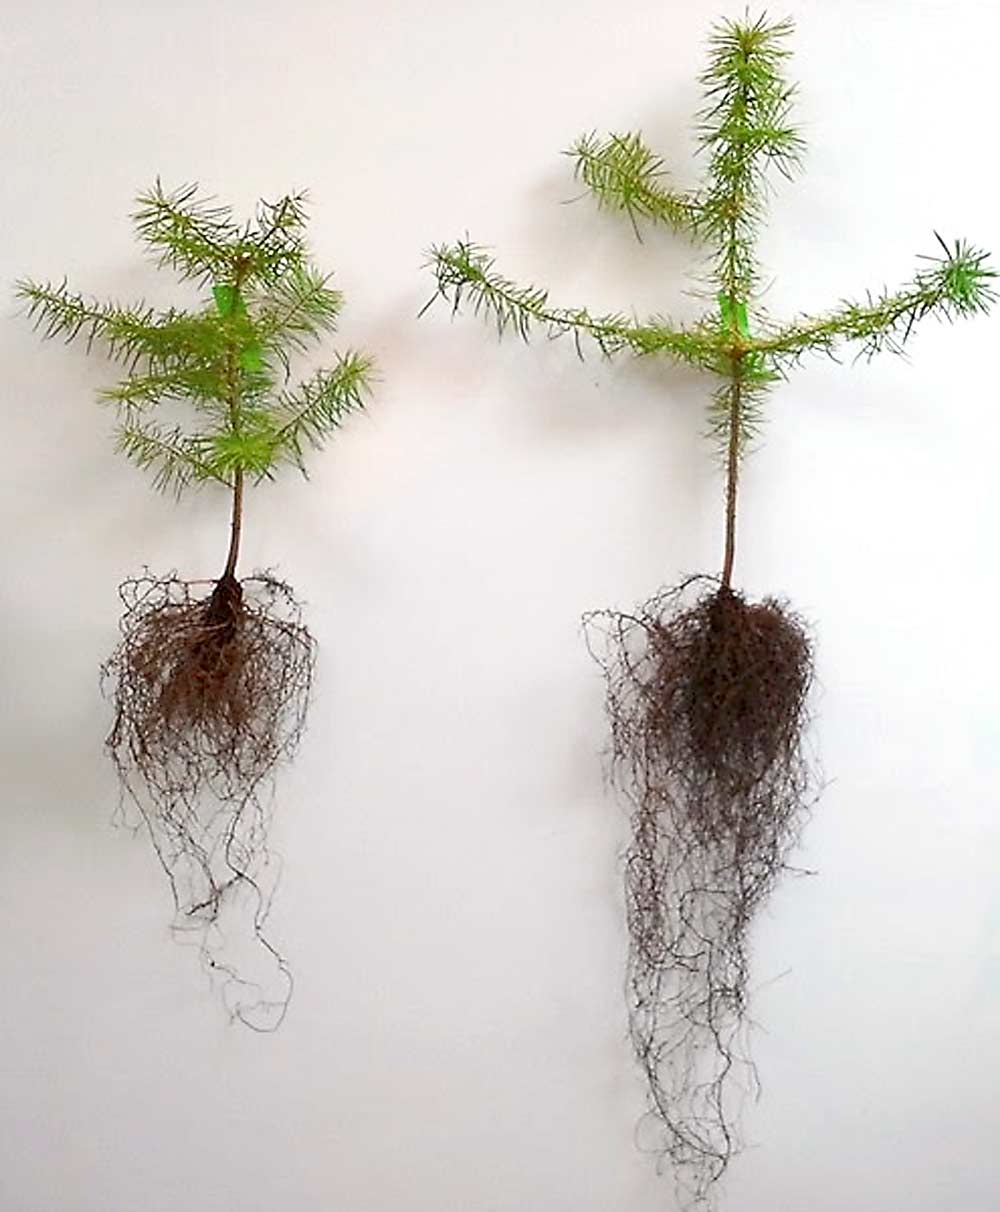 Inoculated Douglas fir seedlings grow more roots. (Courtesy Sharon Doty)